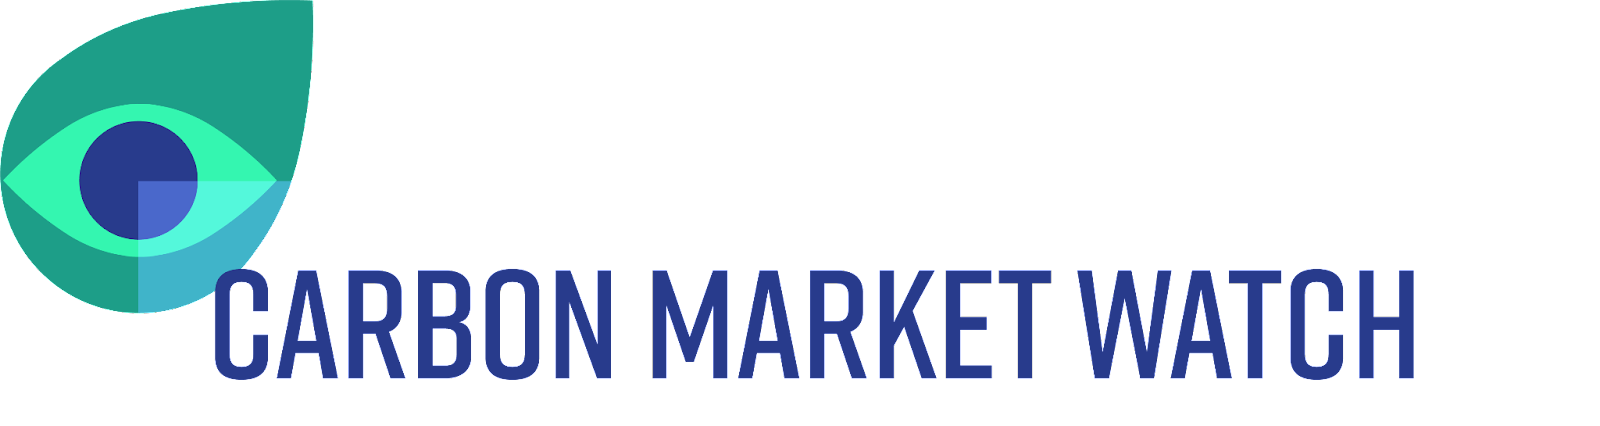 Carbon Market Watch Logo